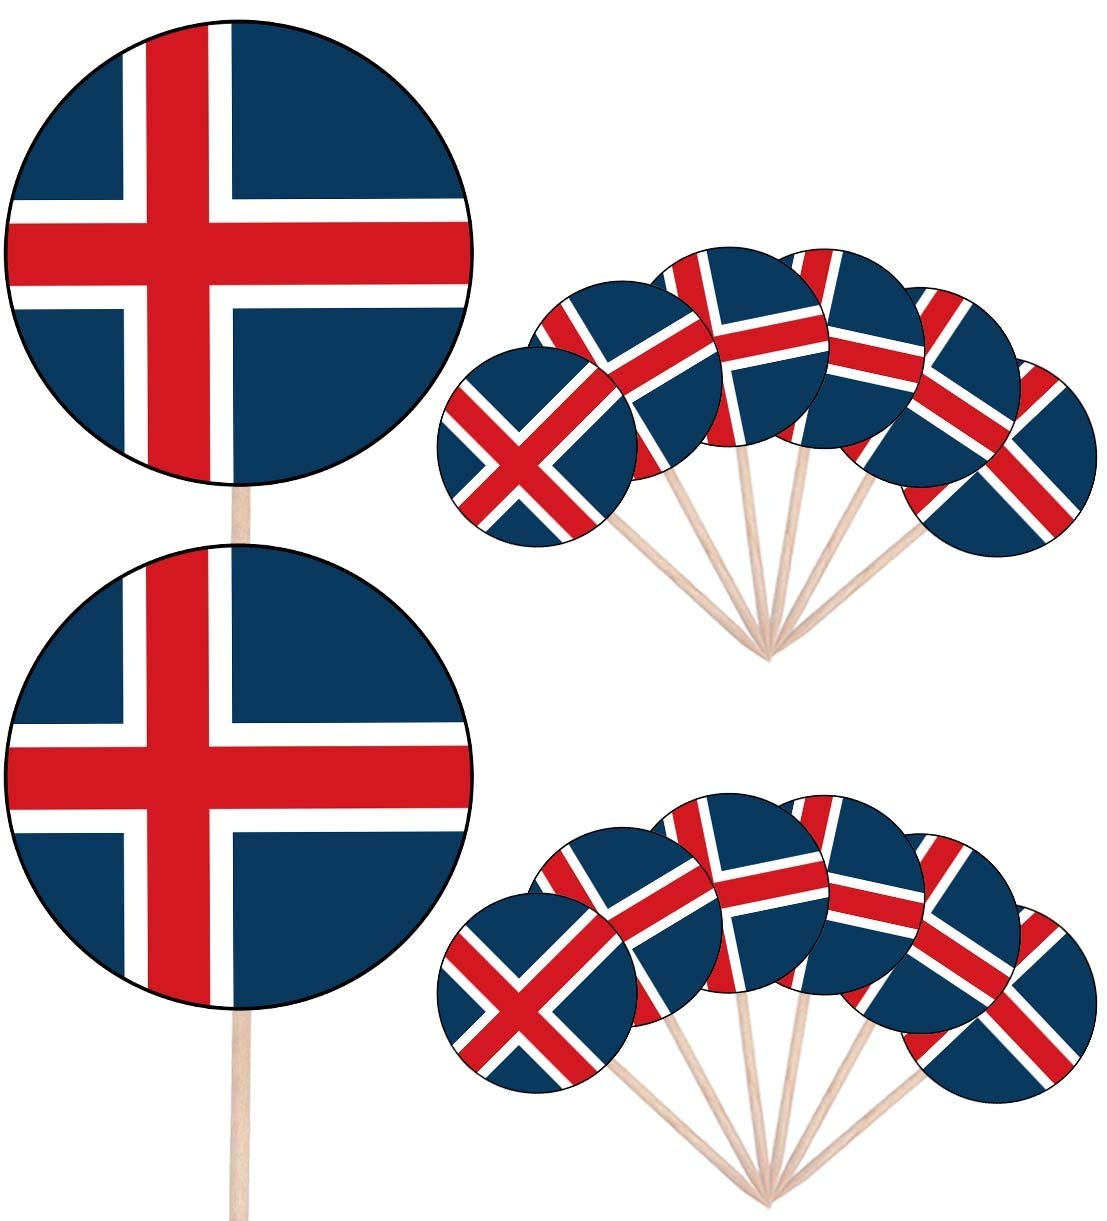 Island-Flagge Party Essen Kuchen Cupcakes Picks Sticks Flags Stand Up Dekorationen Topper (14 Stück)